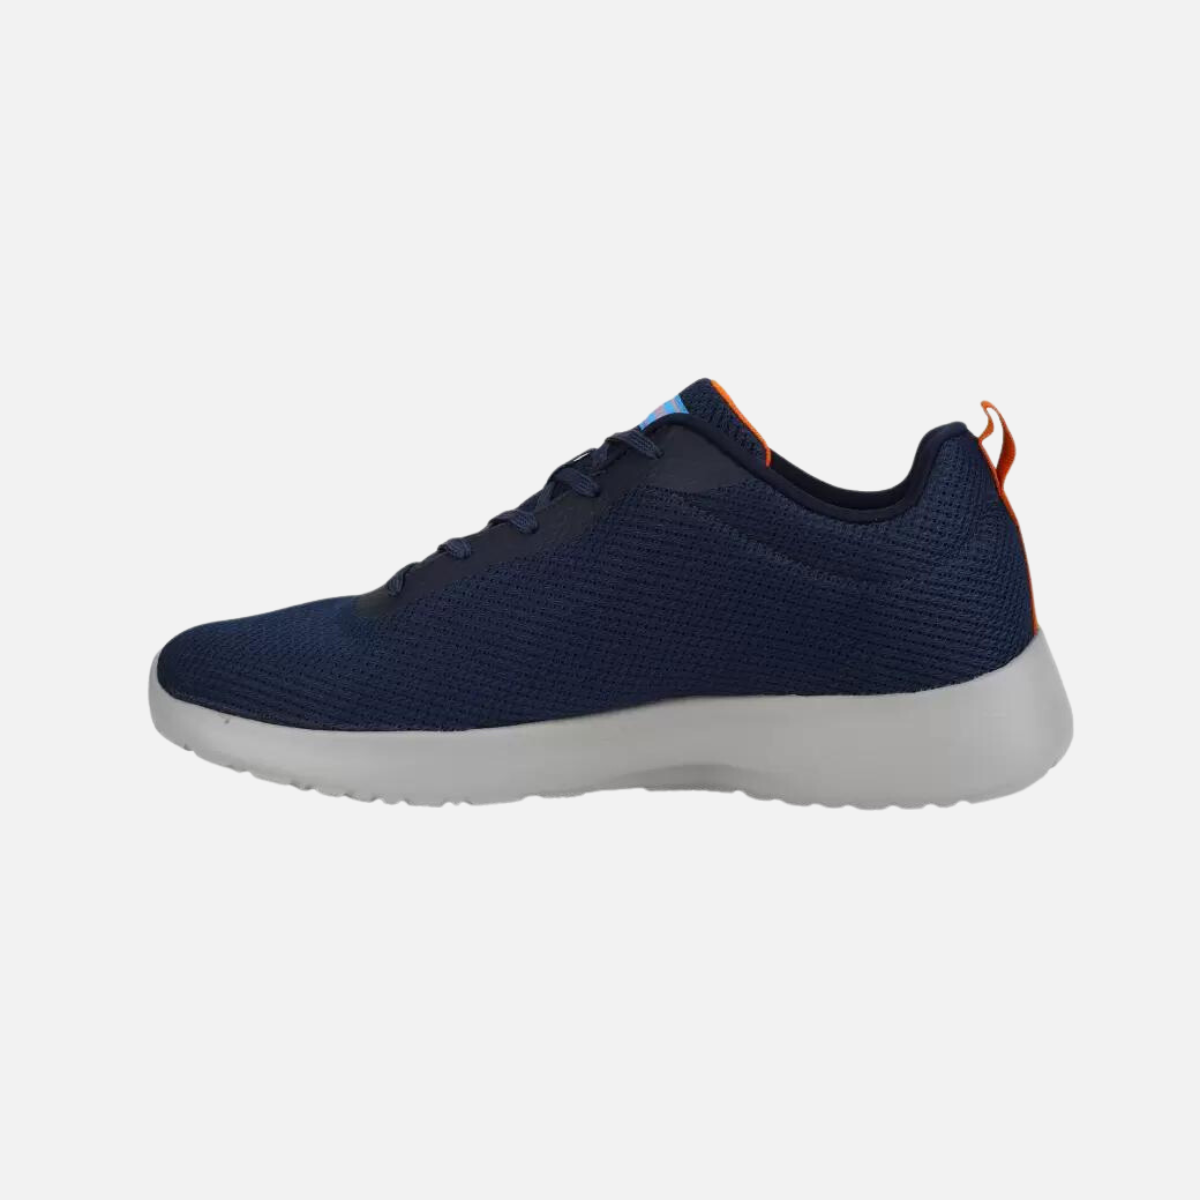 Skechers Dynamight Men's Running Shoes -Navy/Orange